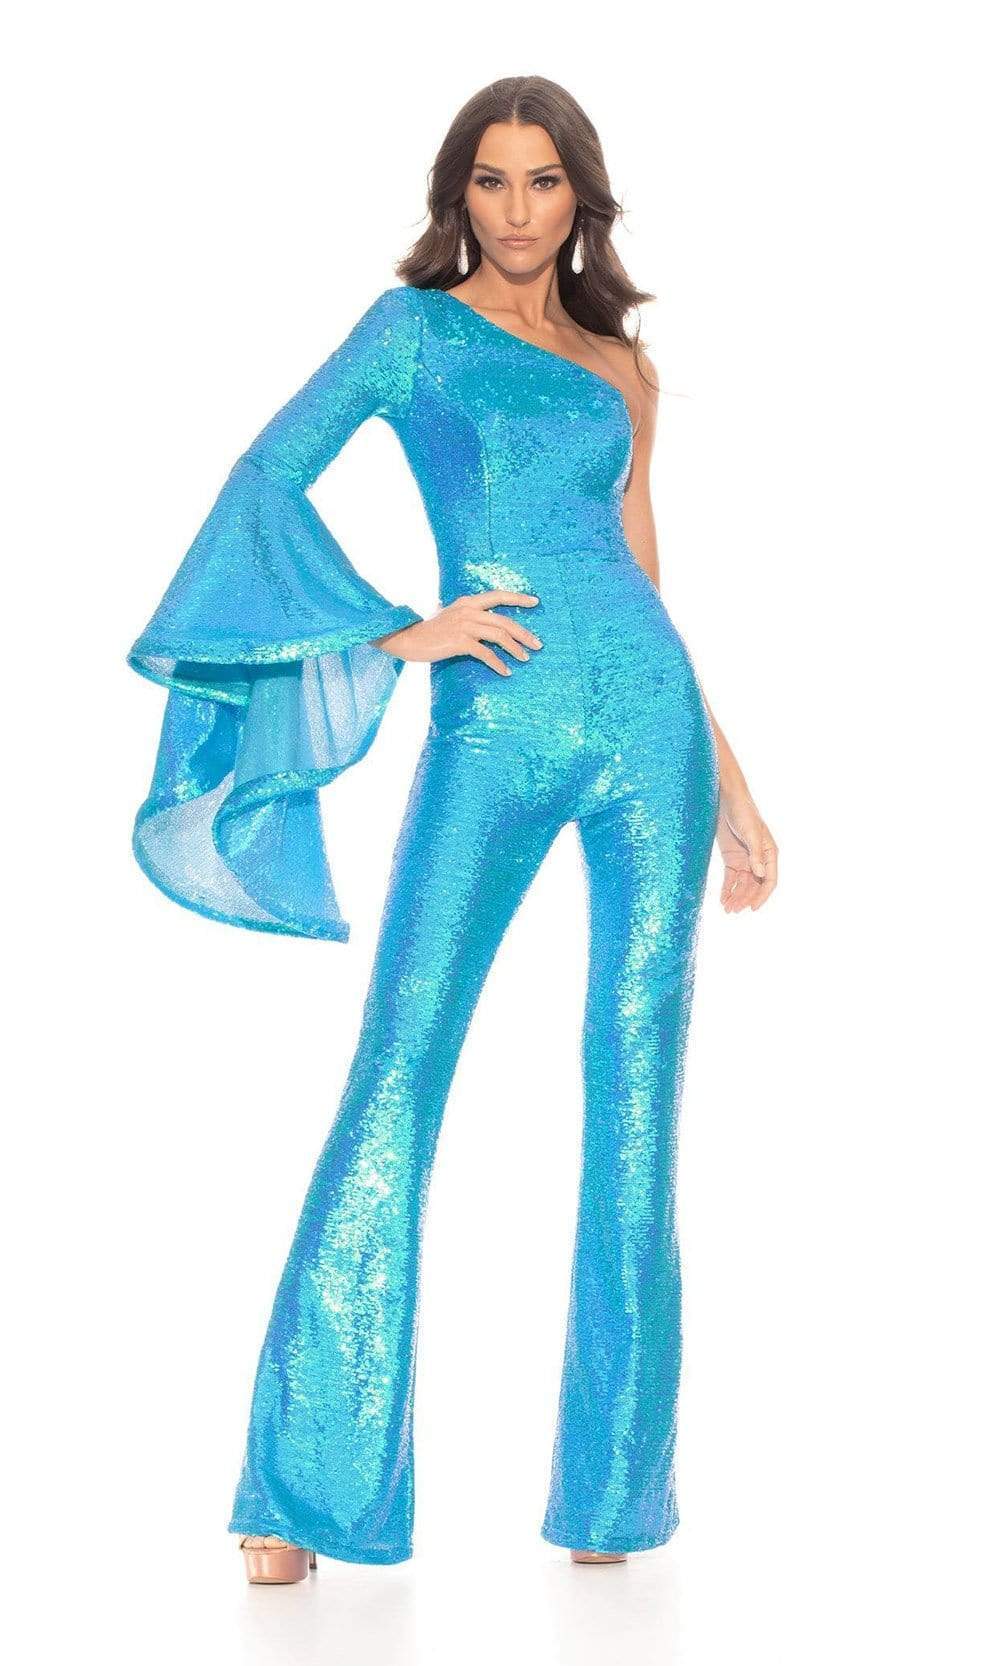 Ashley Lauren - 11047 One Shoulder Bell Sleeve Full Sequin Jumpsuit Evening Dresses 0 / Neon Blue